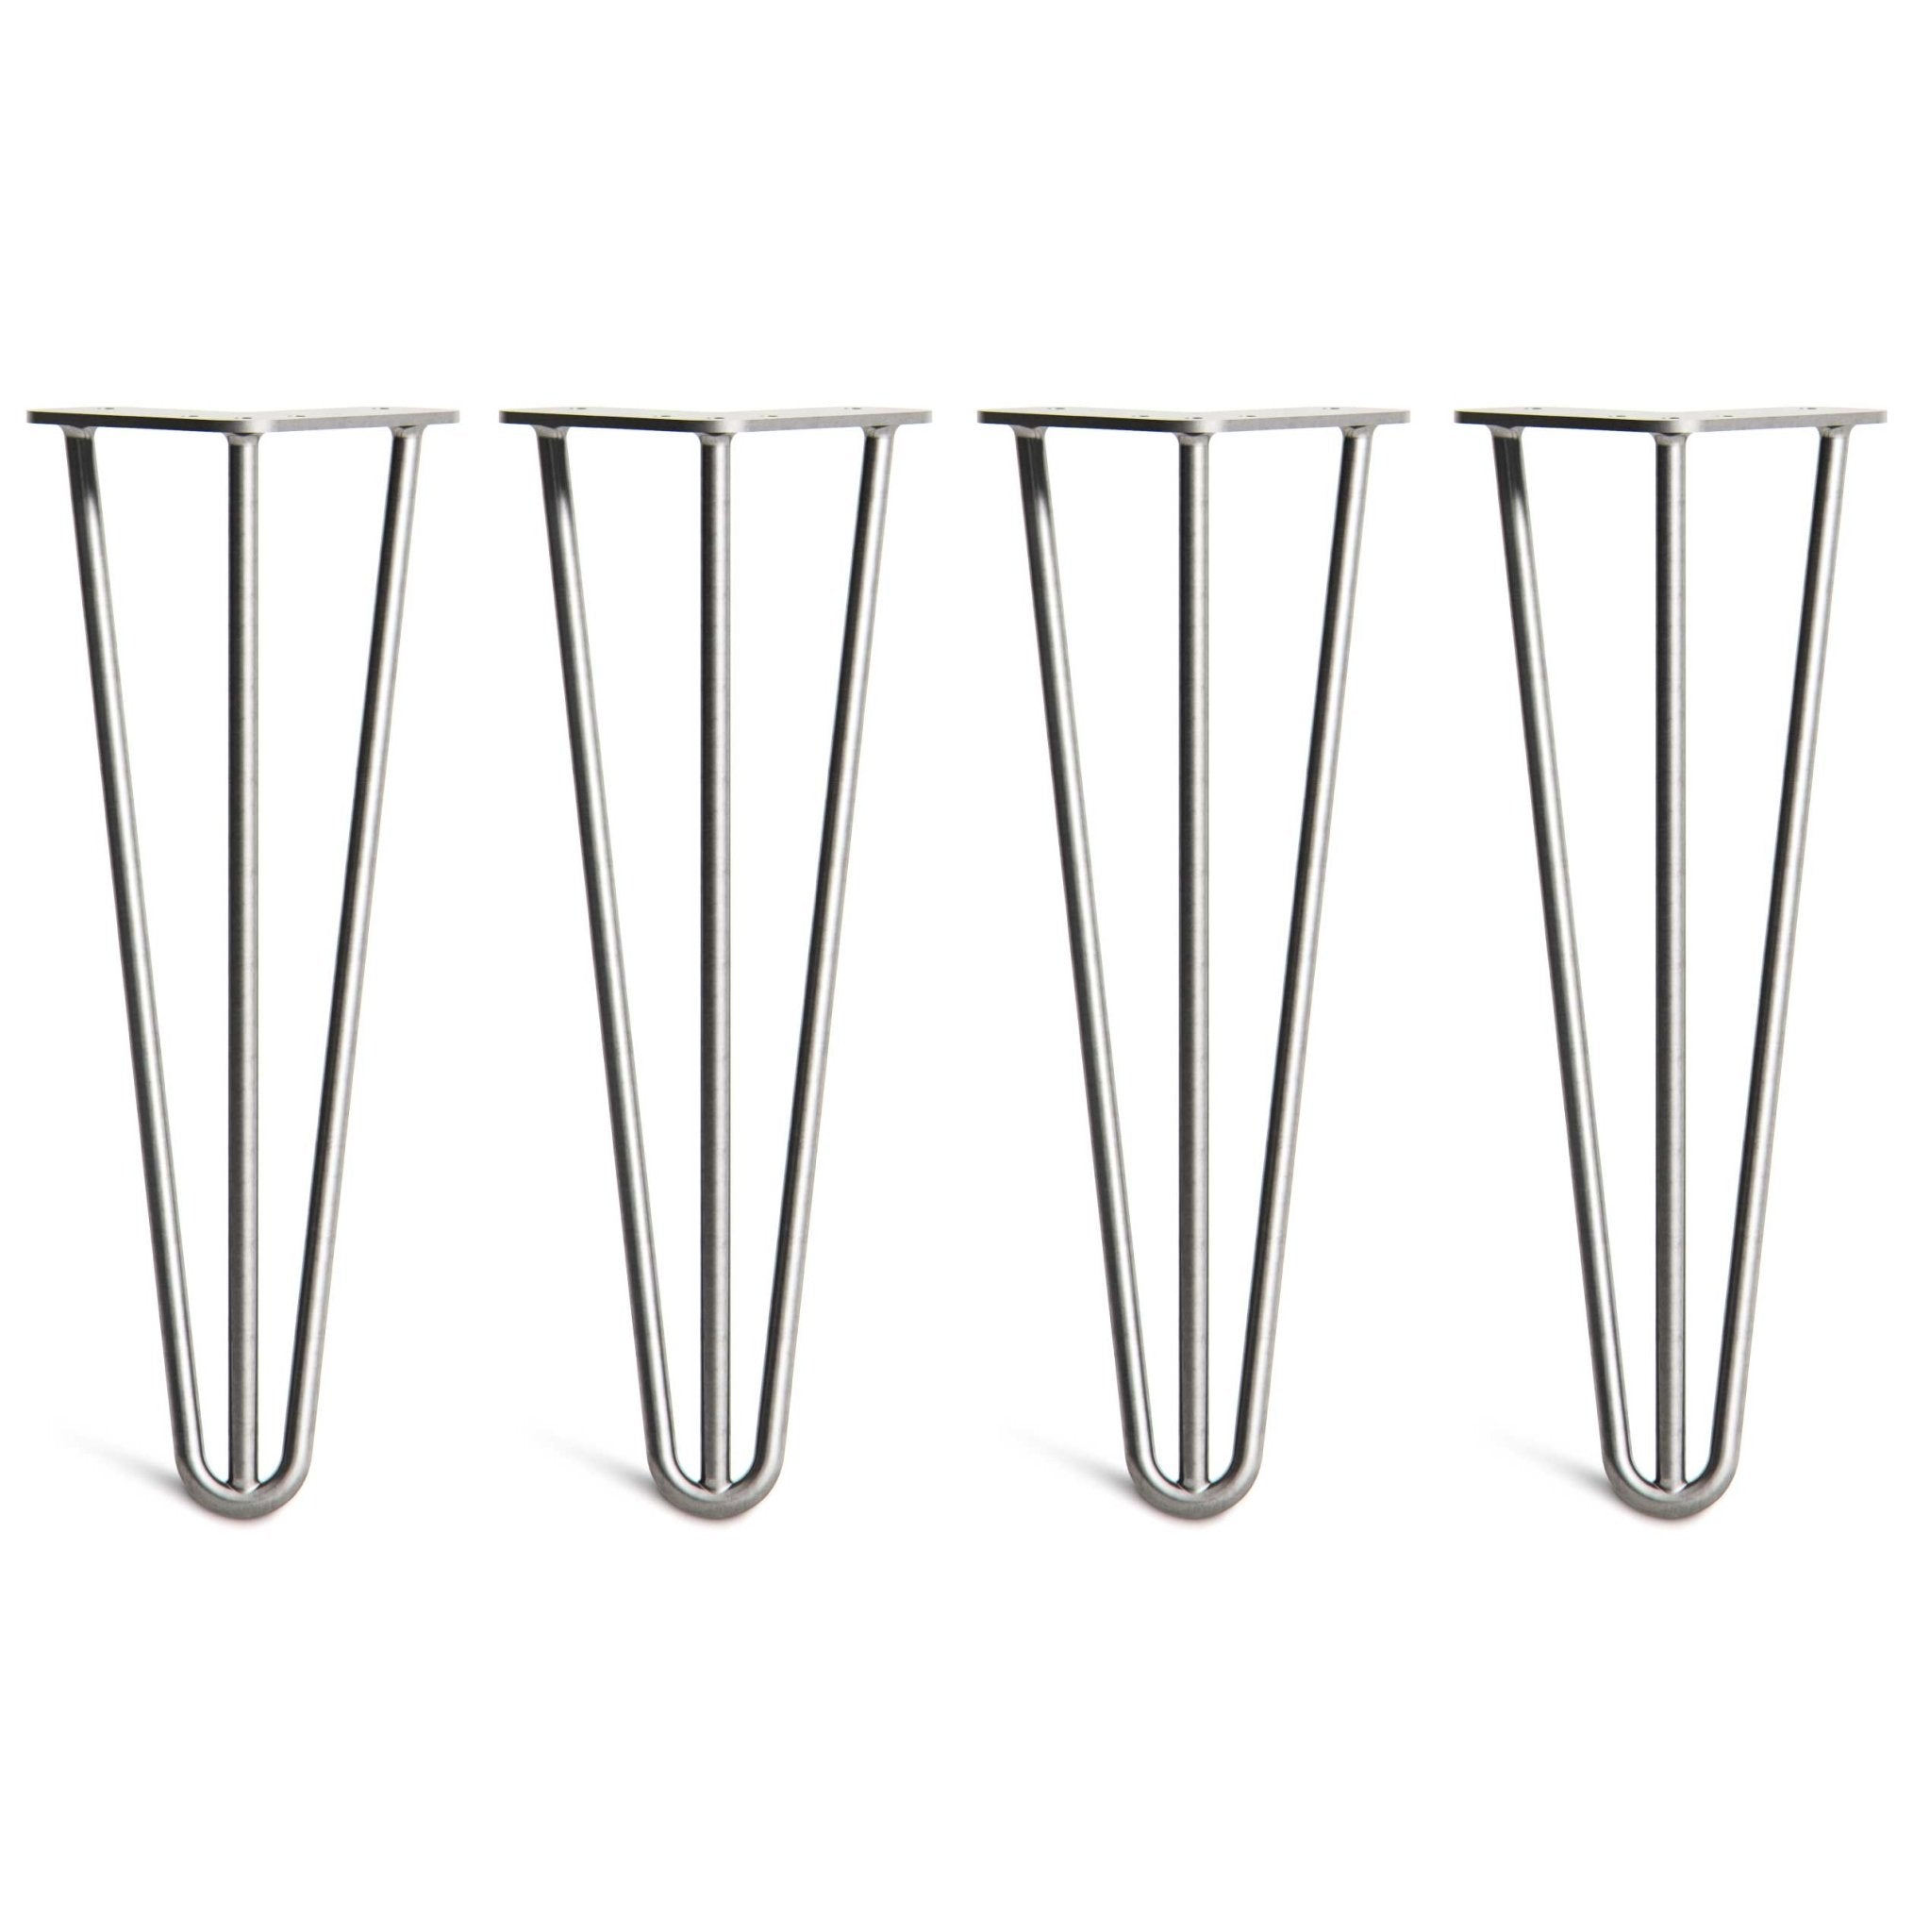 35cm Hairpin Legs - Coffee Table-3 Rod-Raw Steel-The Hairpin Leg Co.